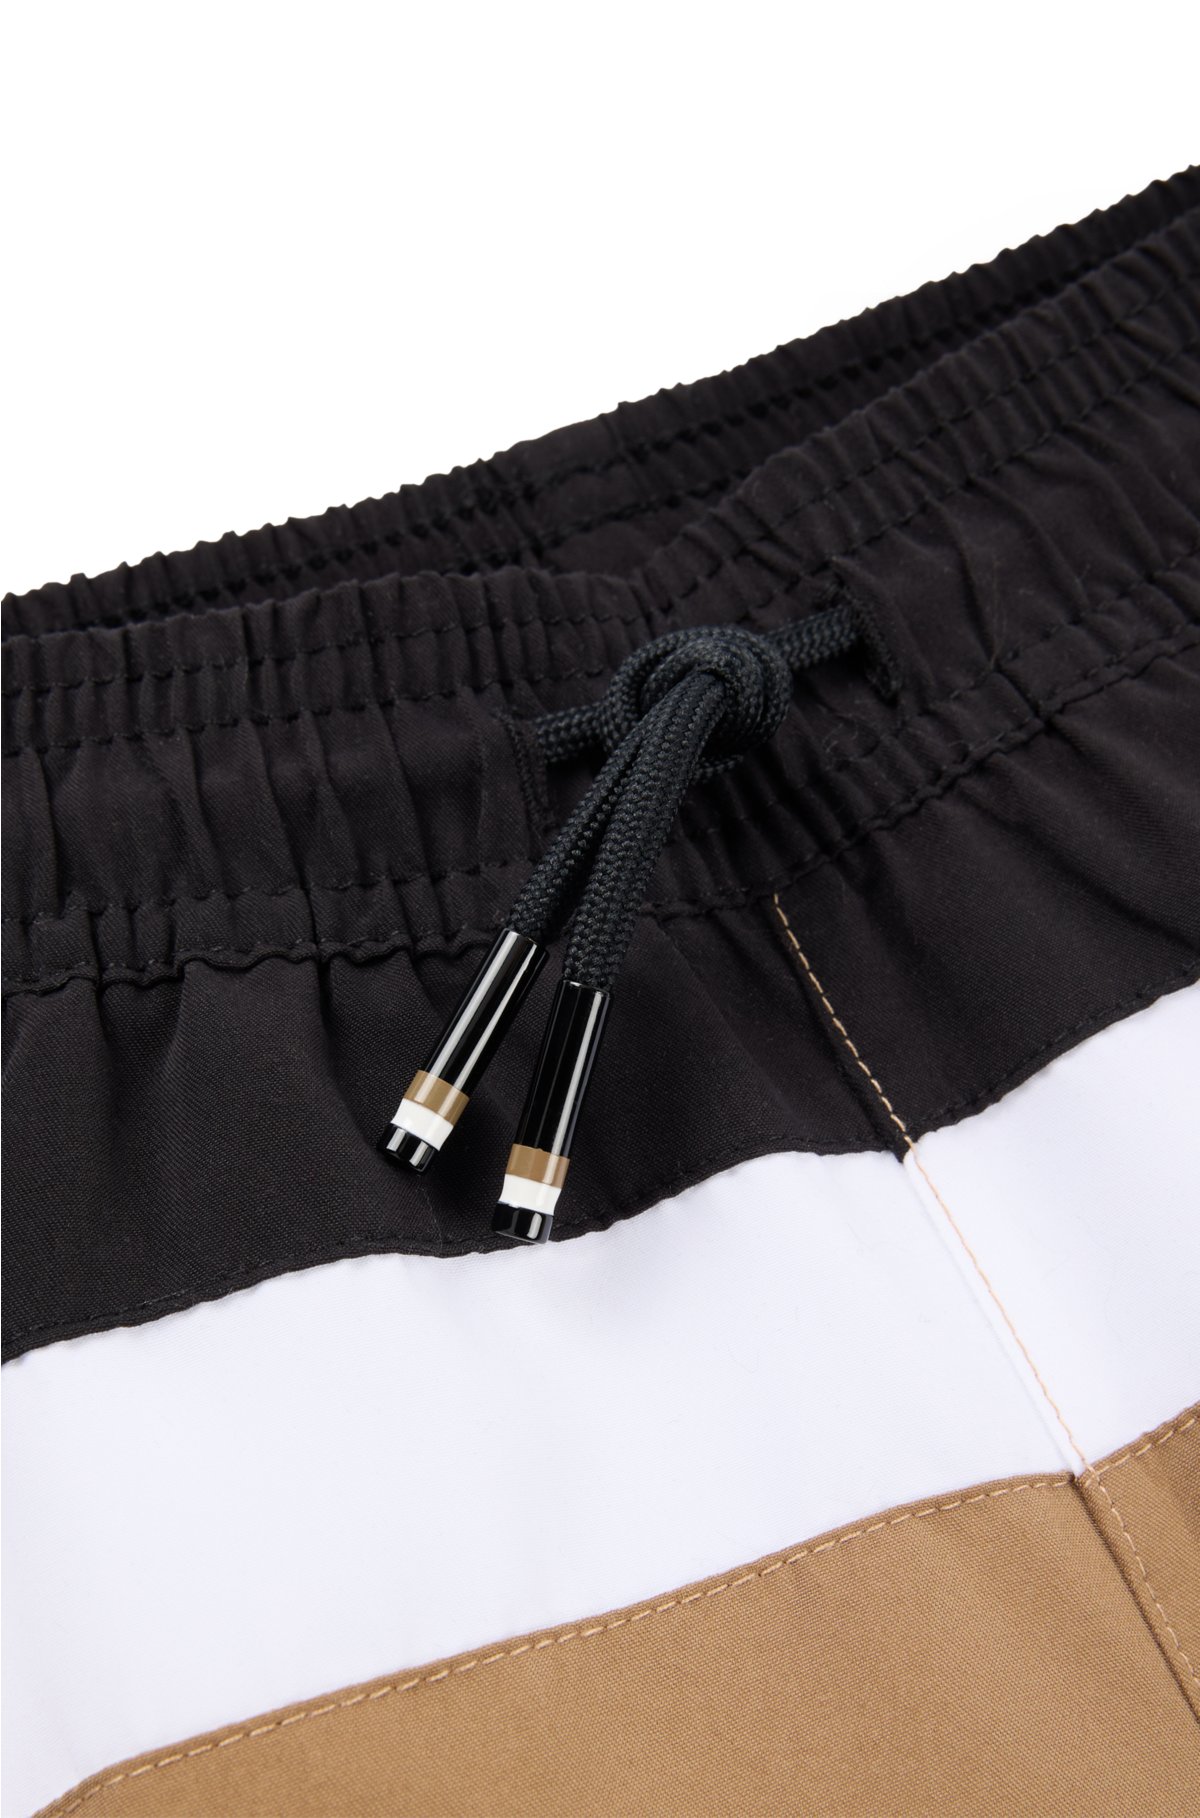 Kids' quick-dry swim shorts with printed stripes, Black